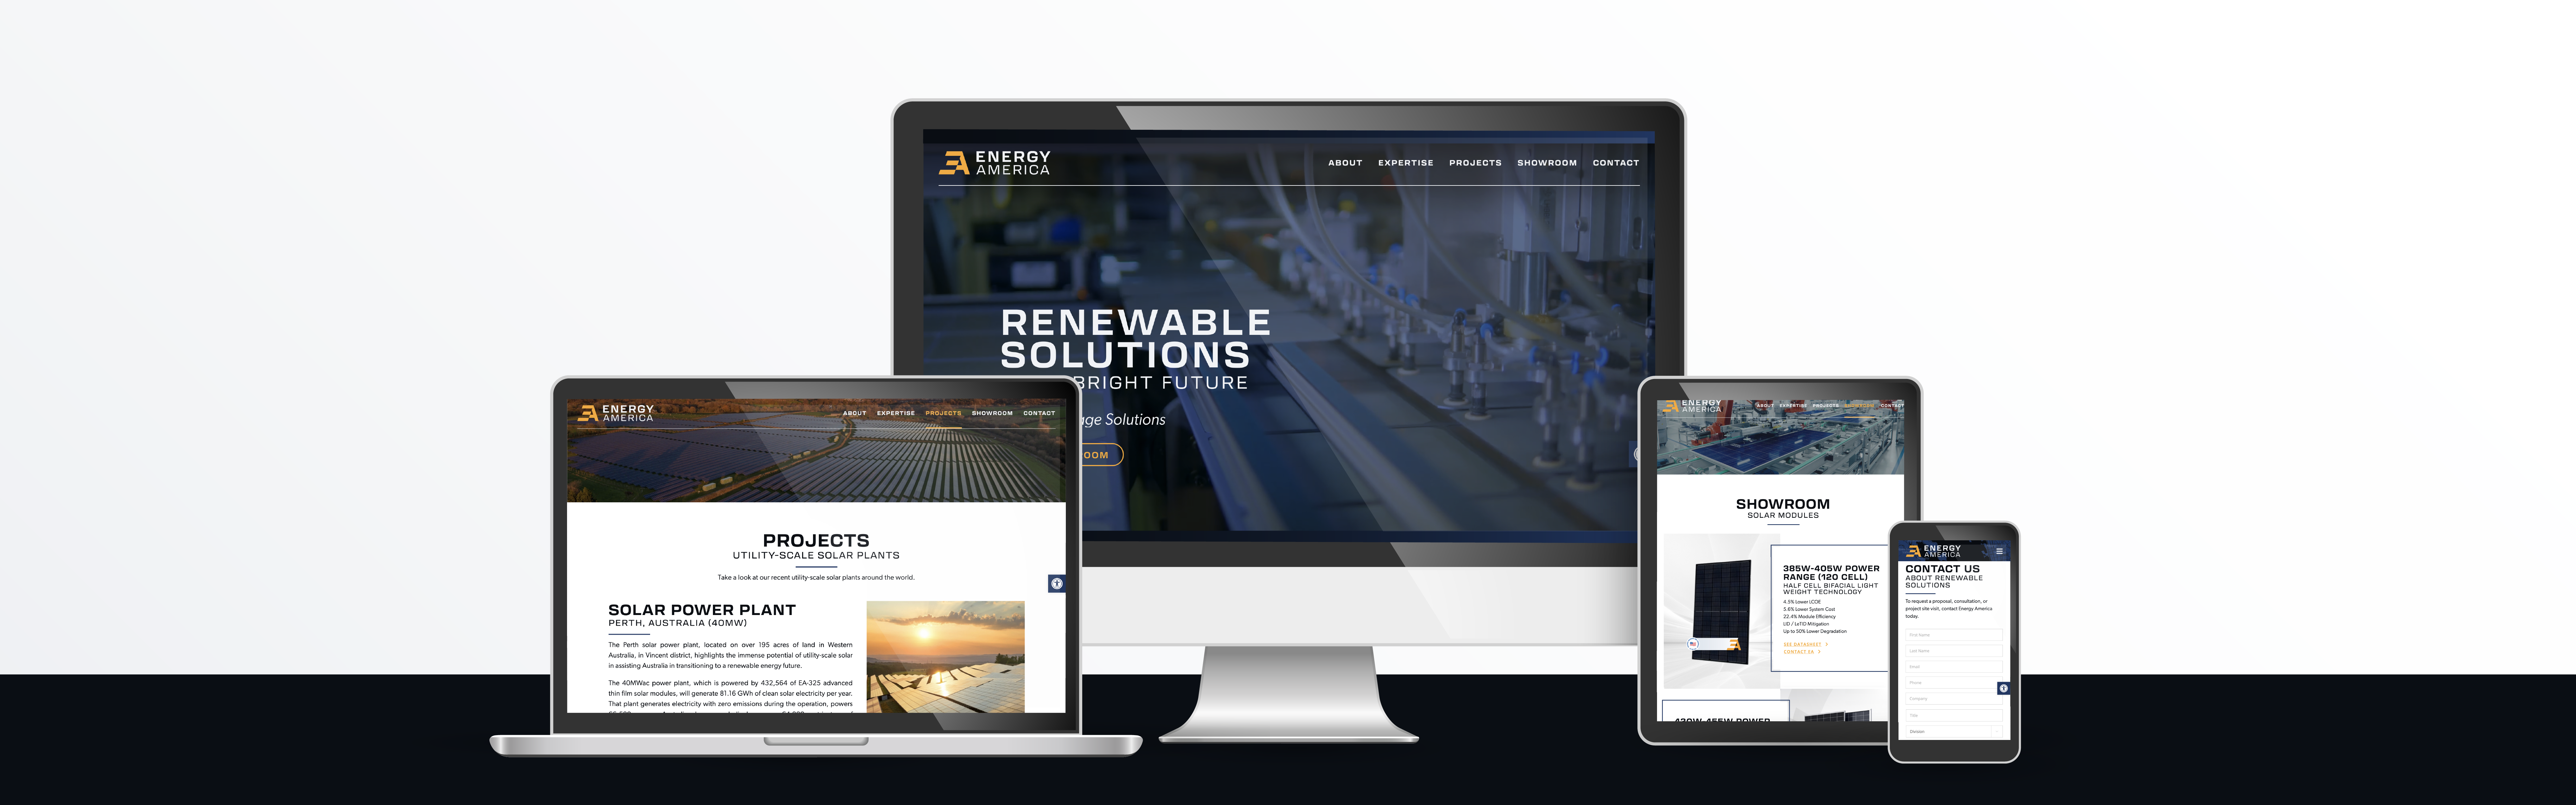 Energy America website design